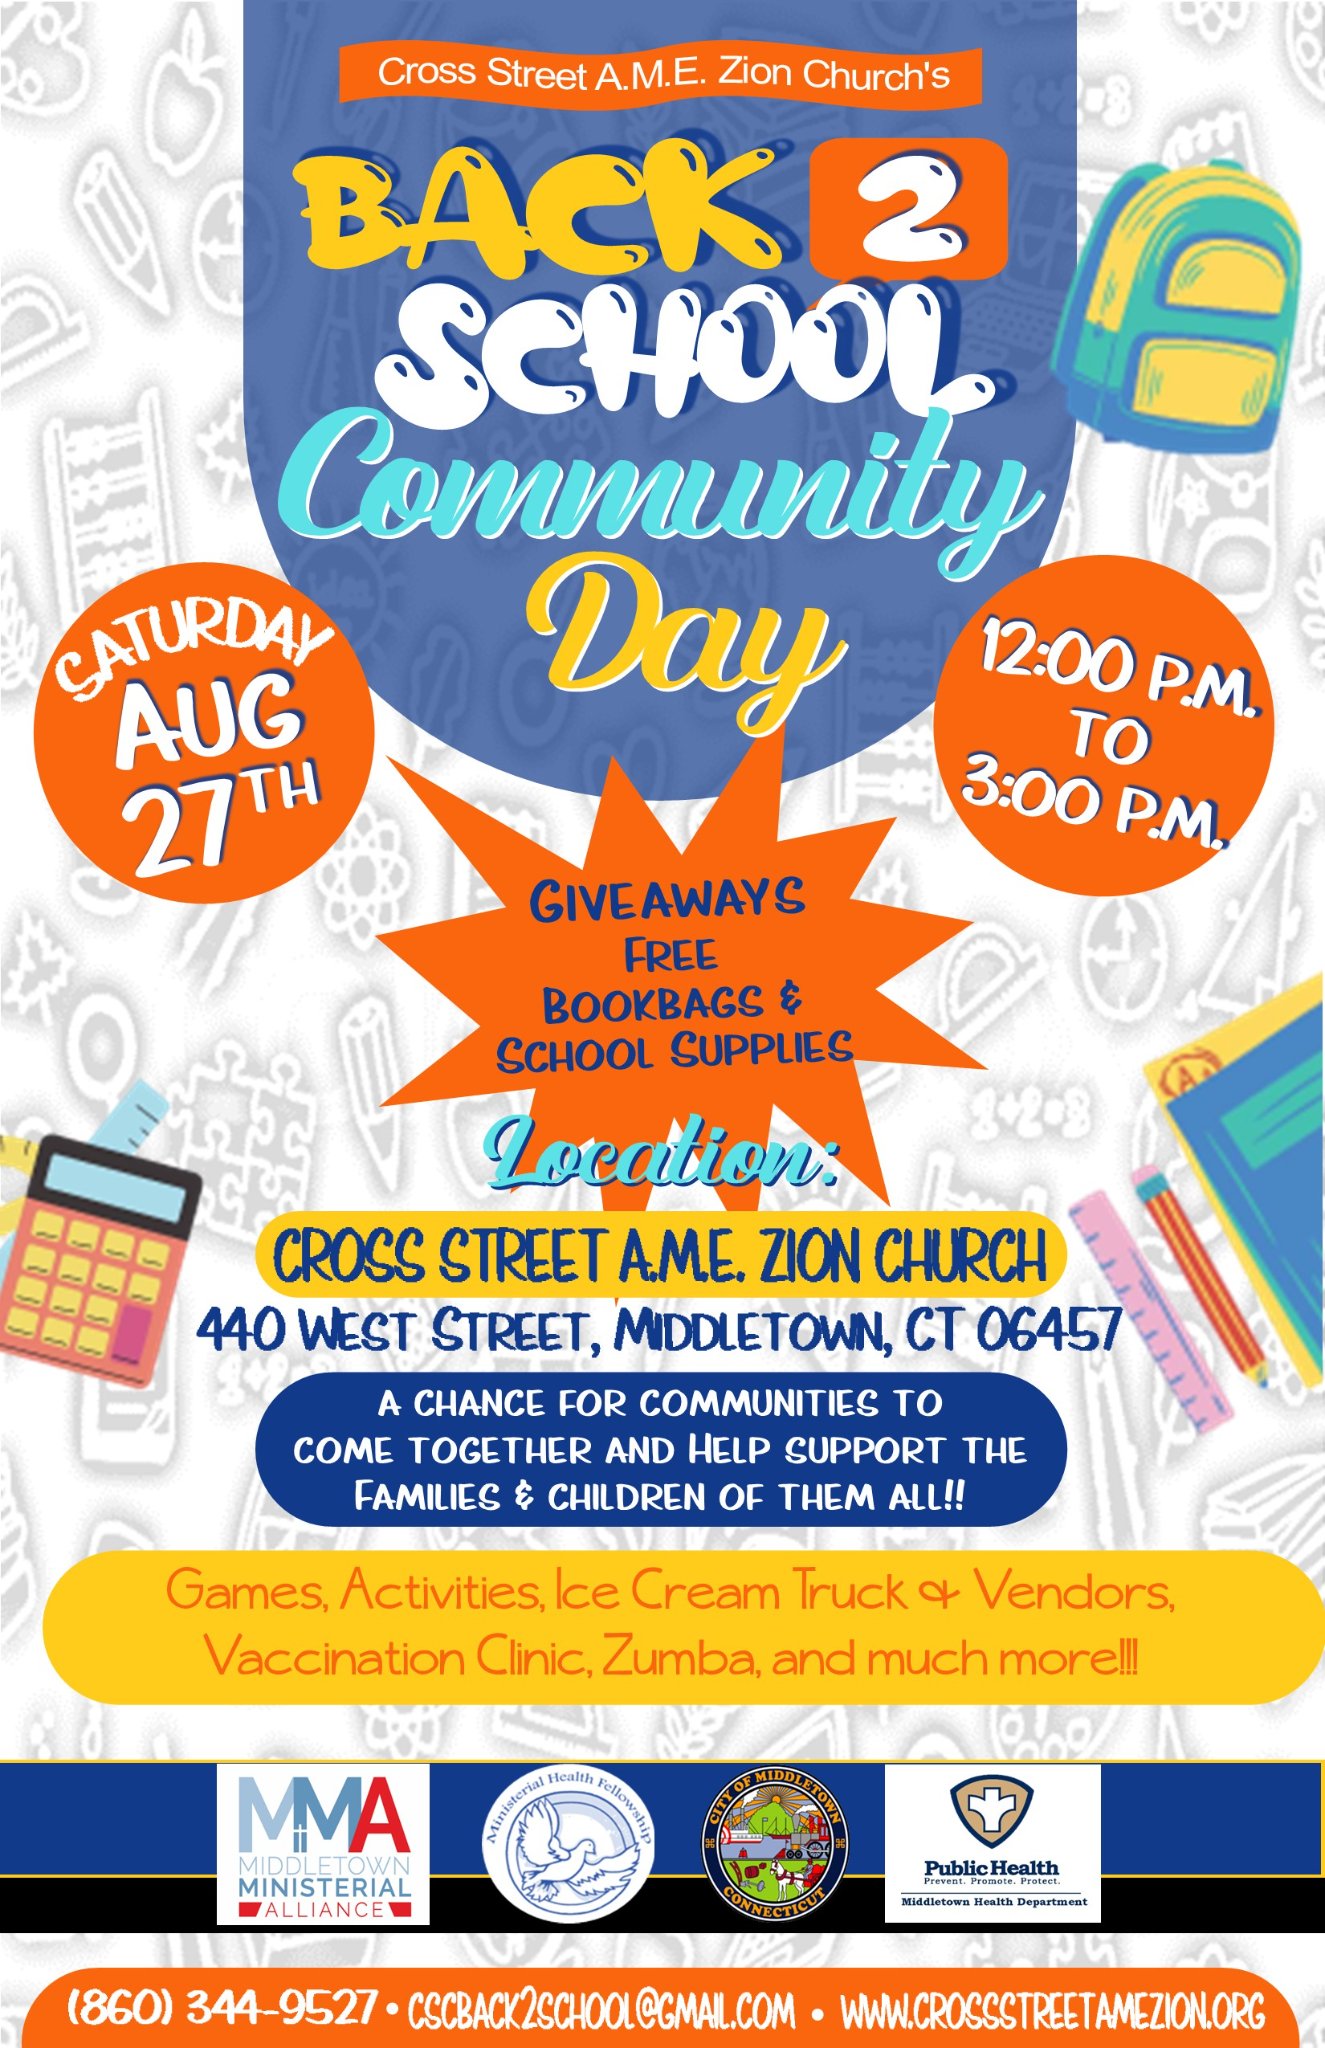 Cross Street AME Zion Church Community Day